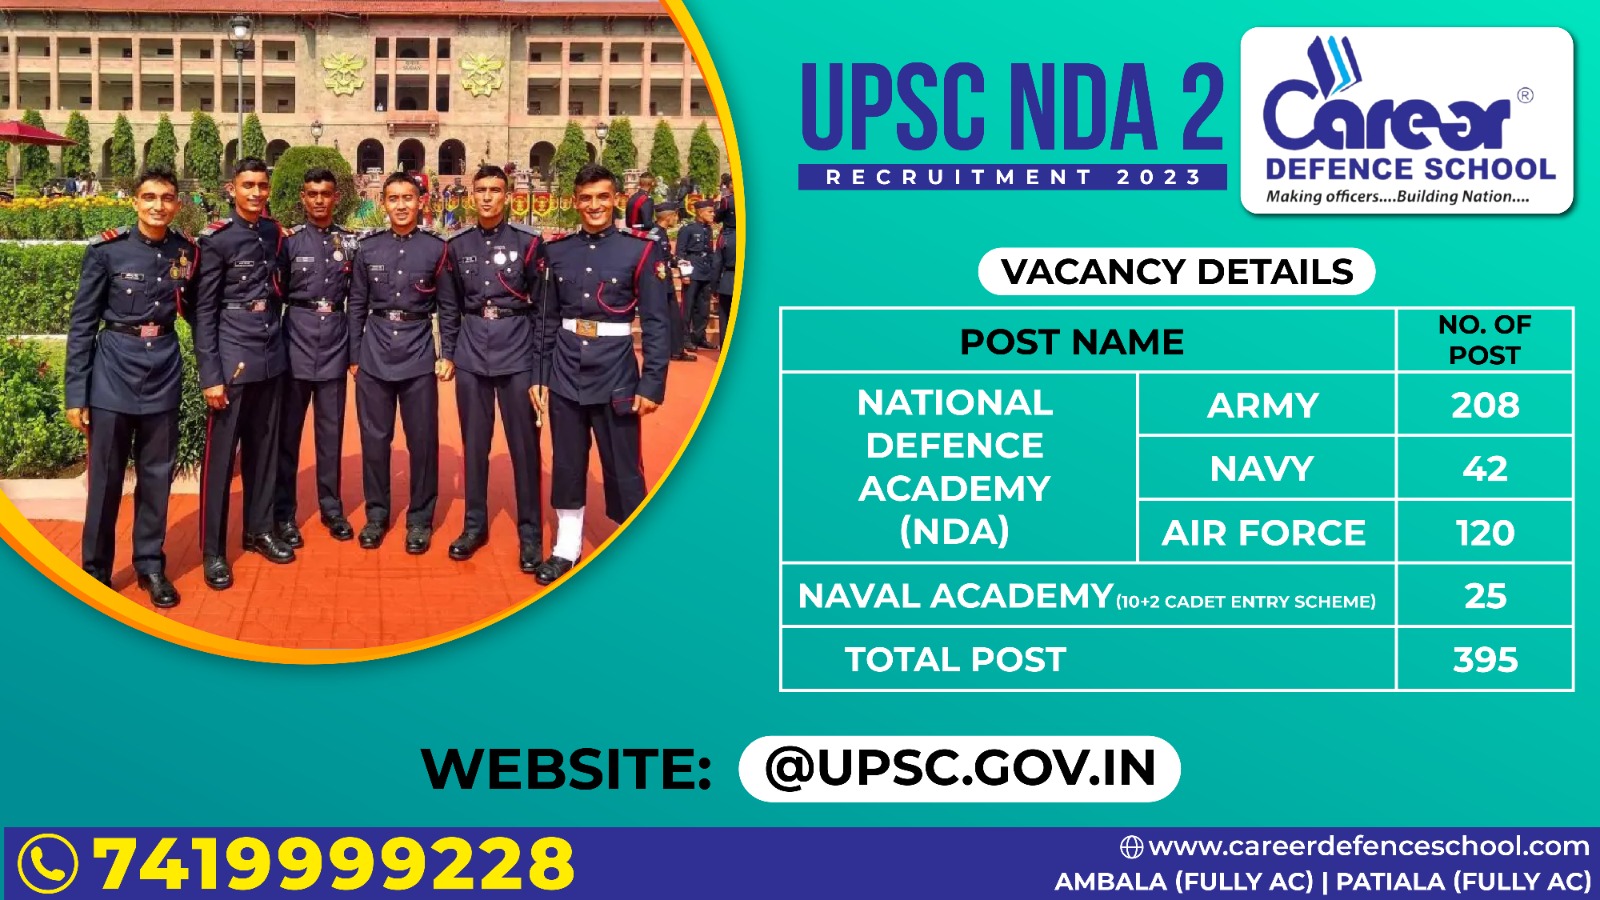 Career Defence School